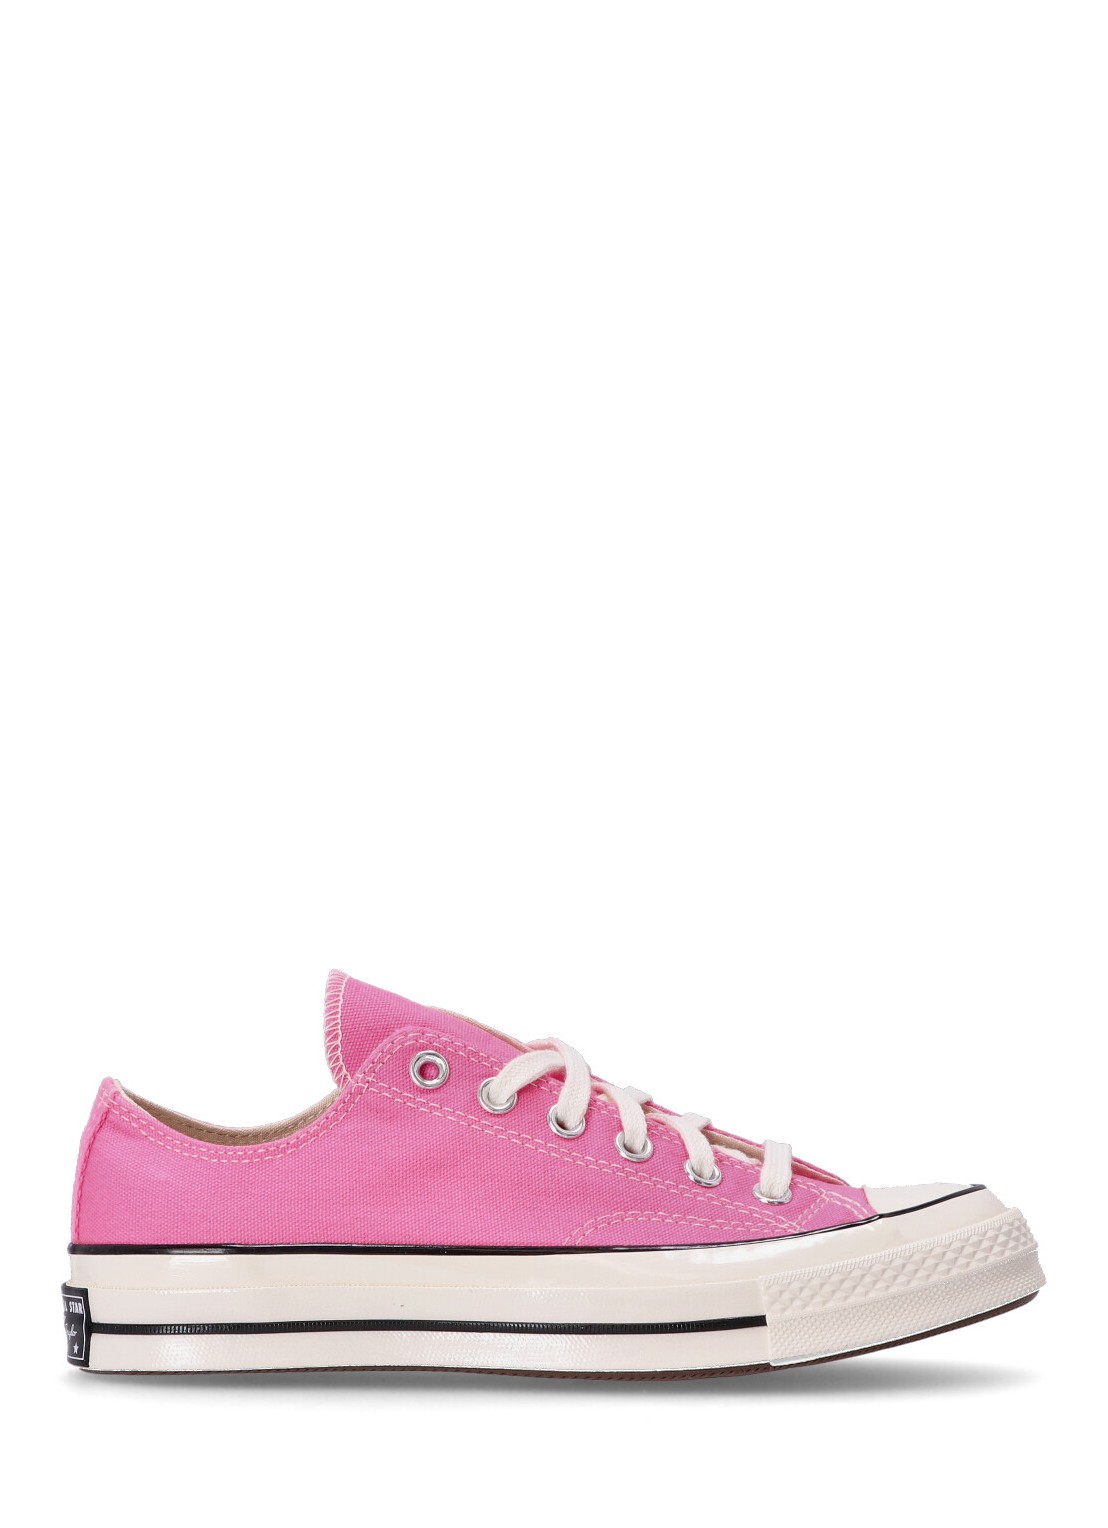 Sneaker converse sneaker woman chuck 70 a08138c pink egret black talla 38
 